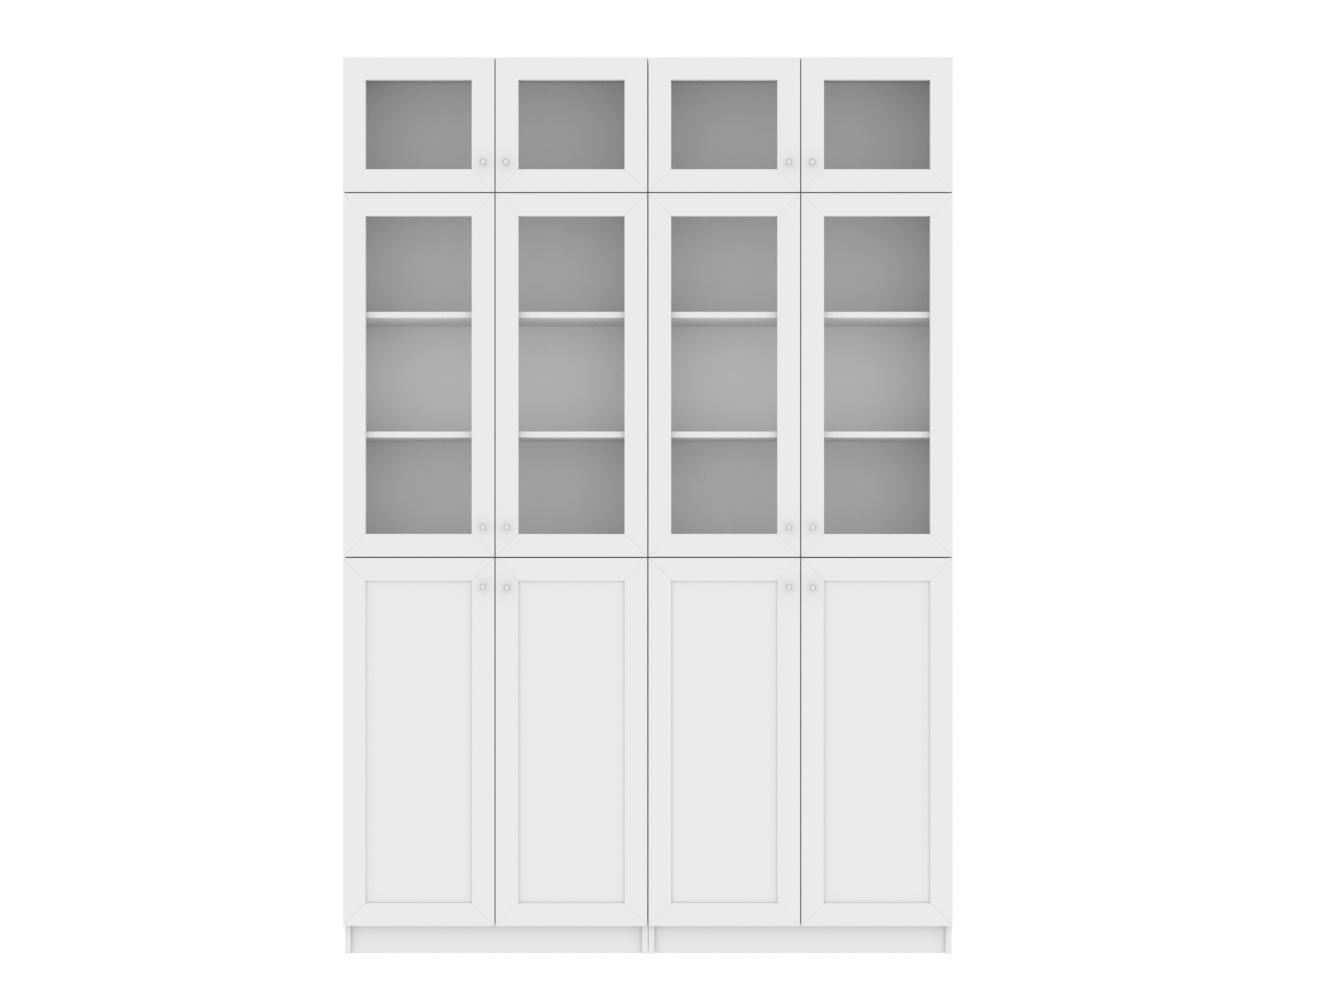  Книжный шкаф Билли 394 white ИКЕА (IKEA) изображение товара